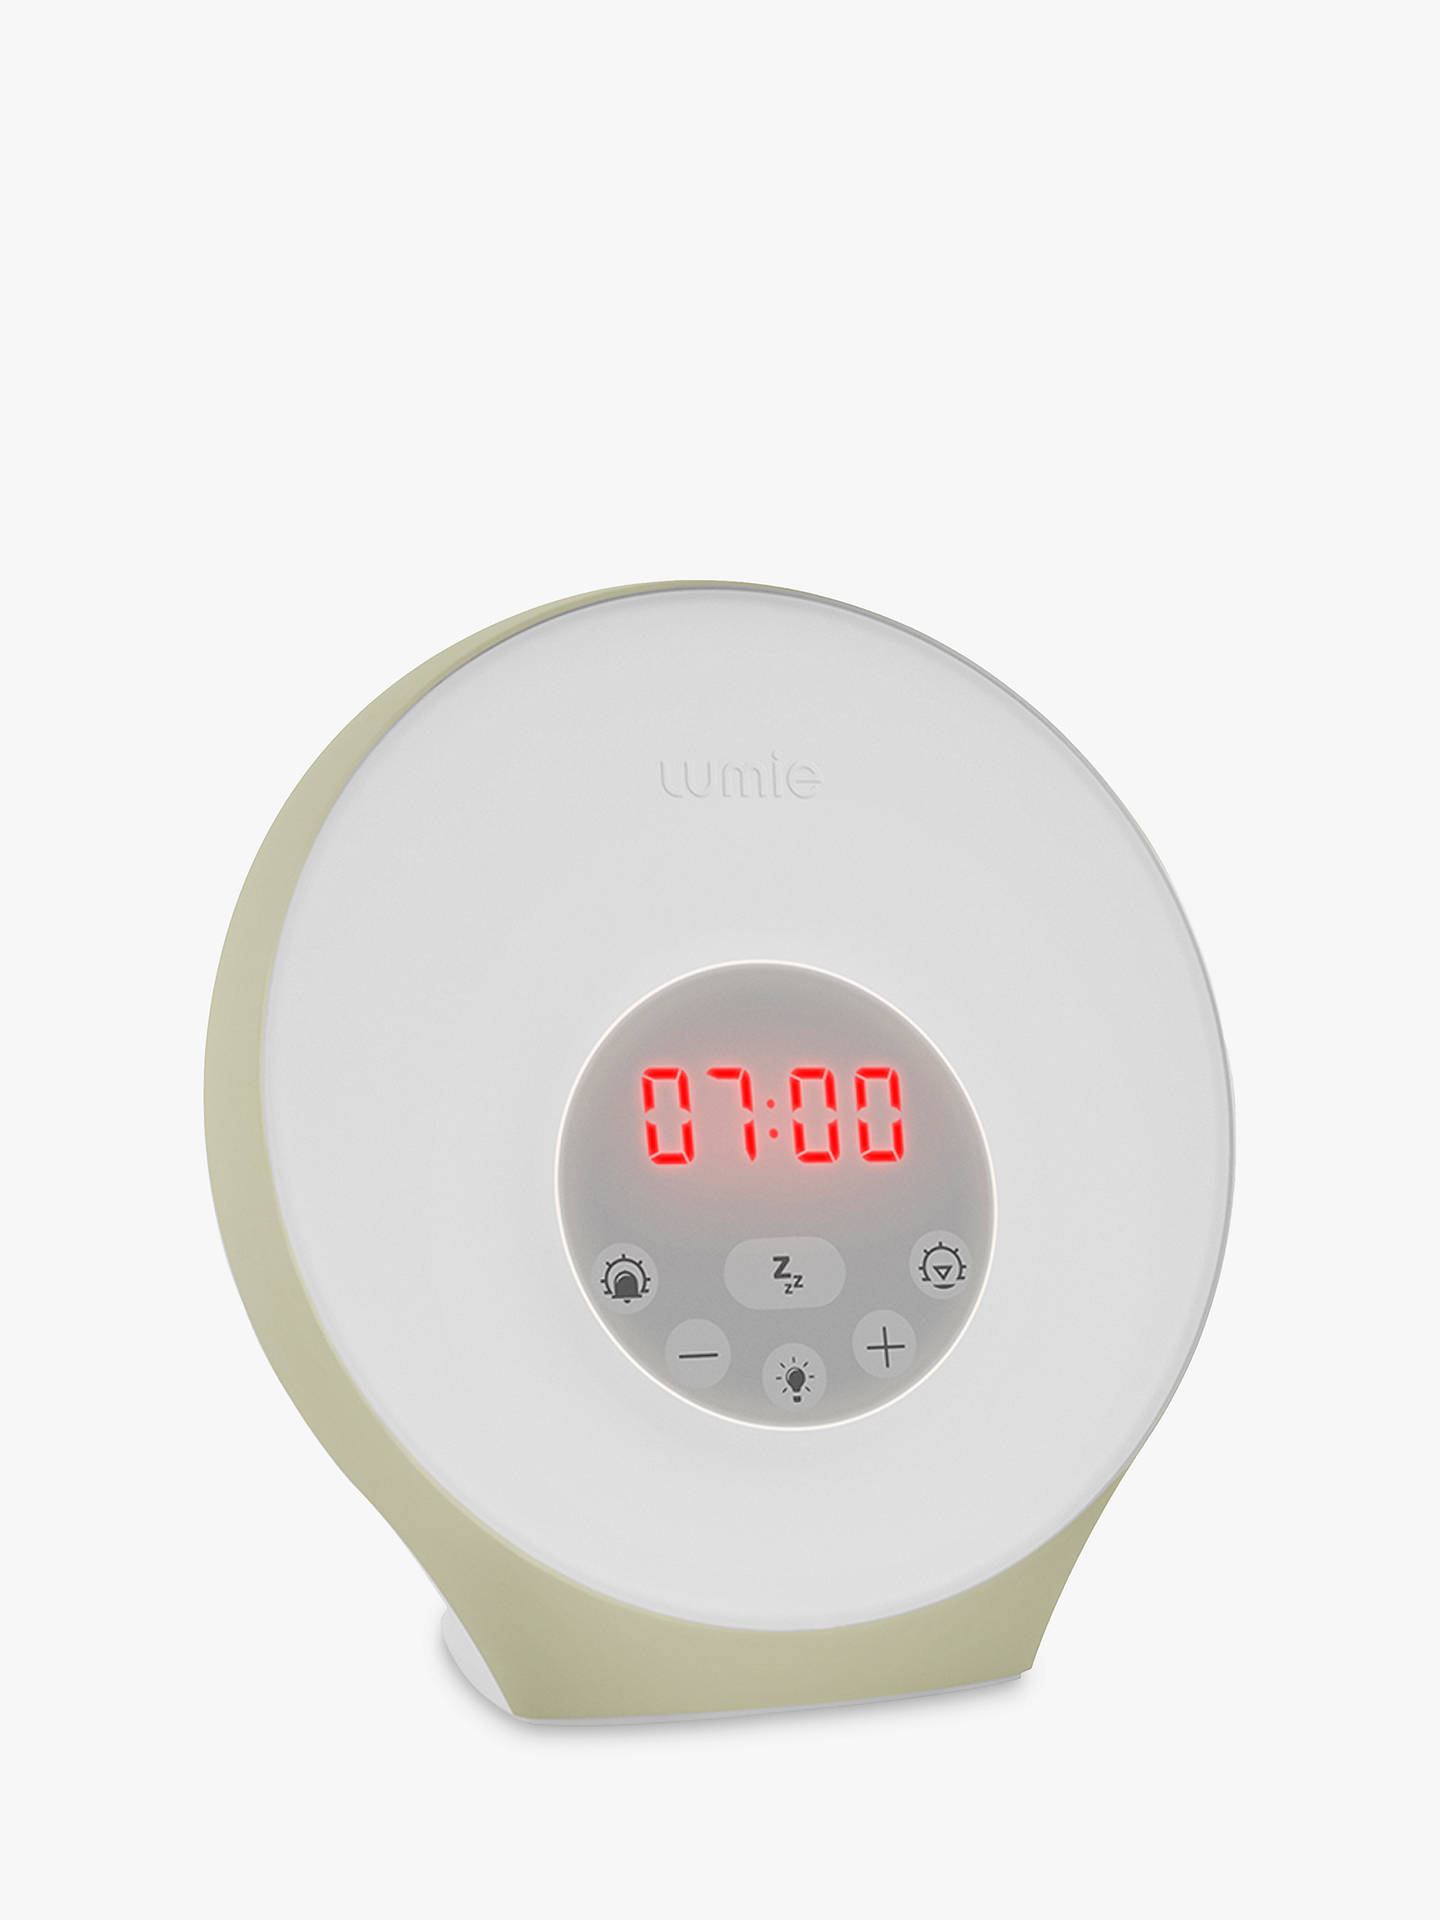 Rugby Player Flip Up Desktop Alarm Clock Ideal Rugby Gift